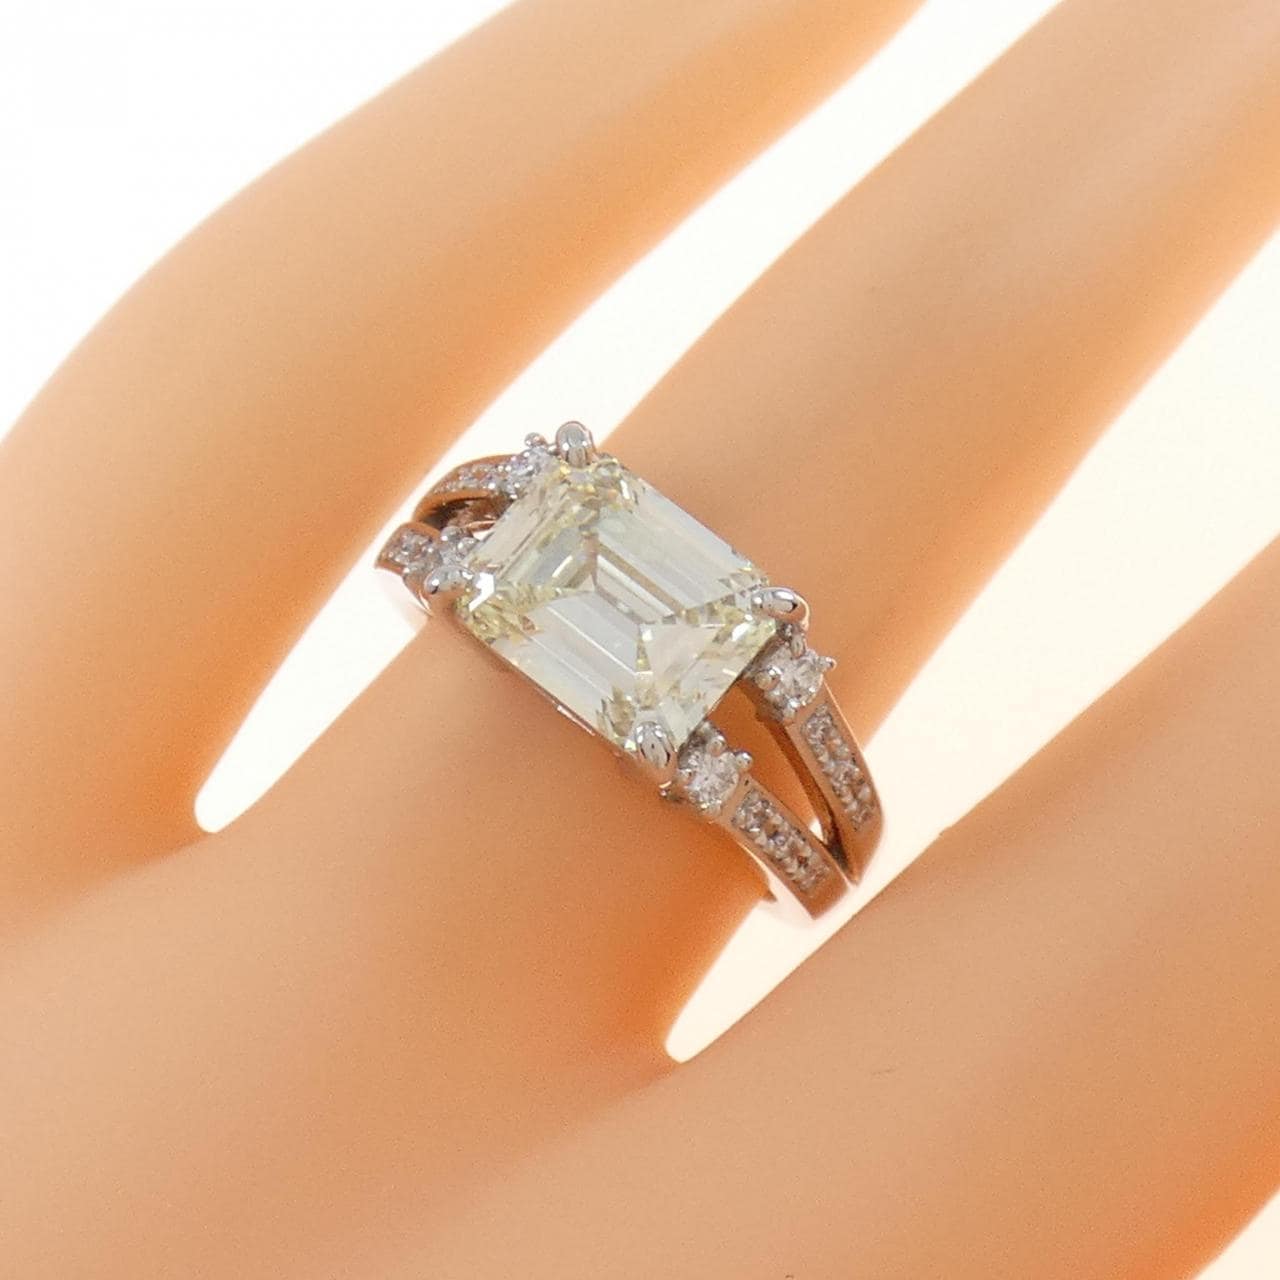 [Remake] PT Diamond Ring 3.026CT LY VS2 Emerald Cut